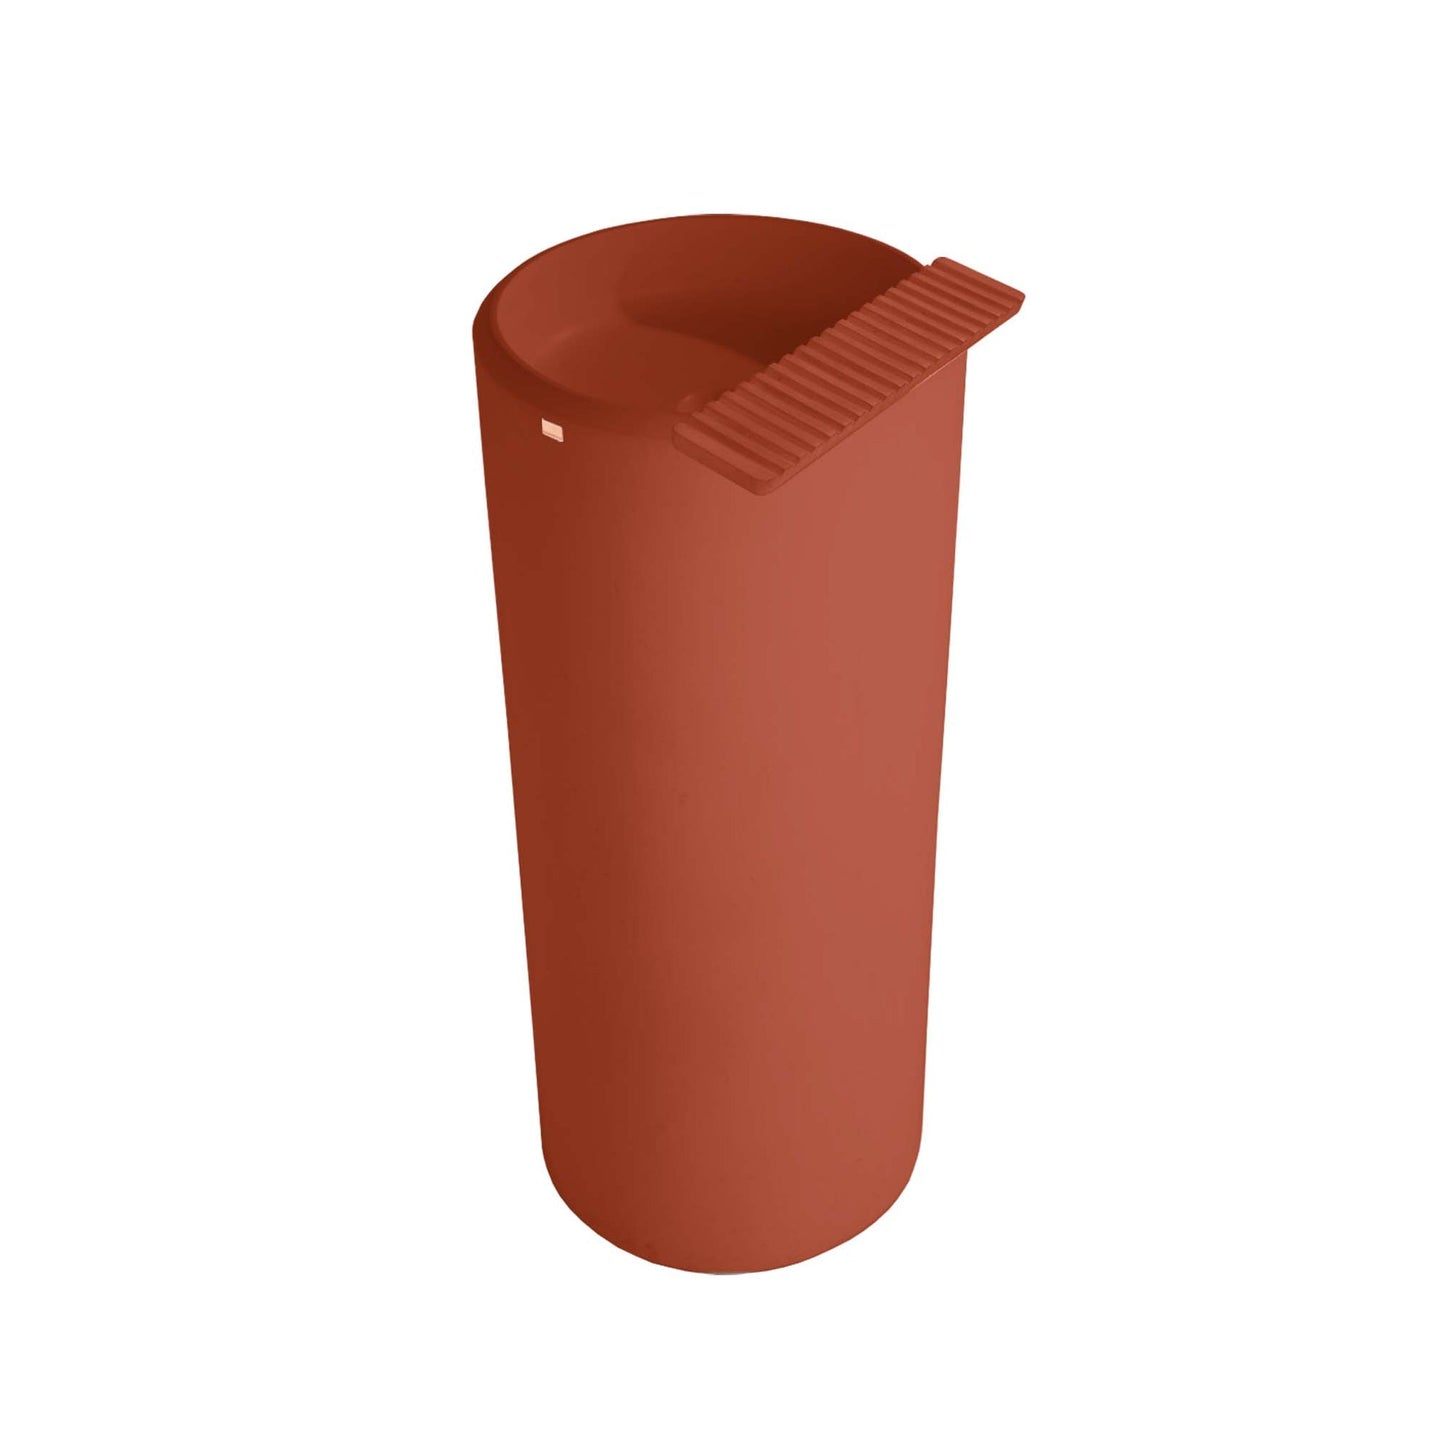 Konkretus Ubud06 15" Terracotta Red Round Pedestal Concrete Bathroom Sink